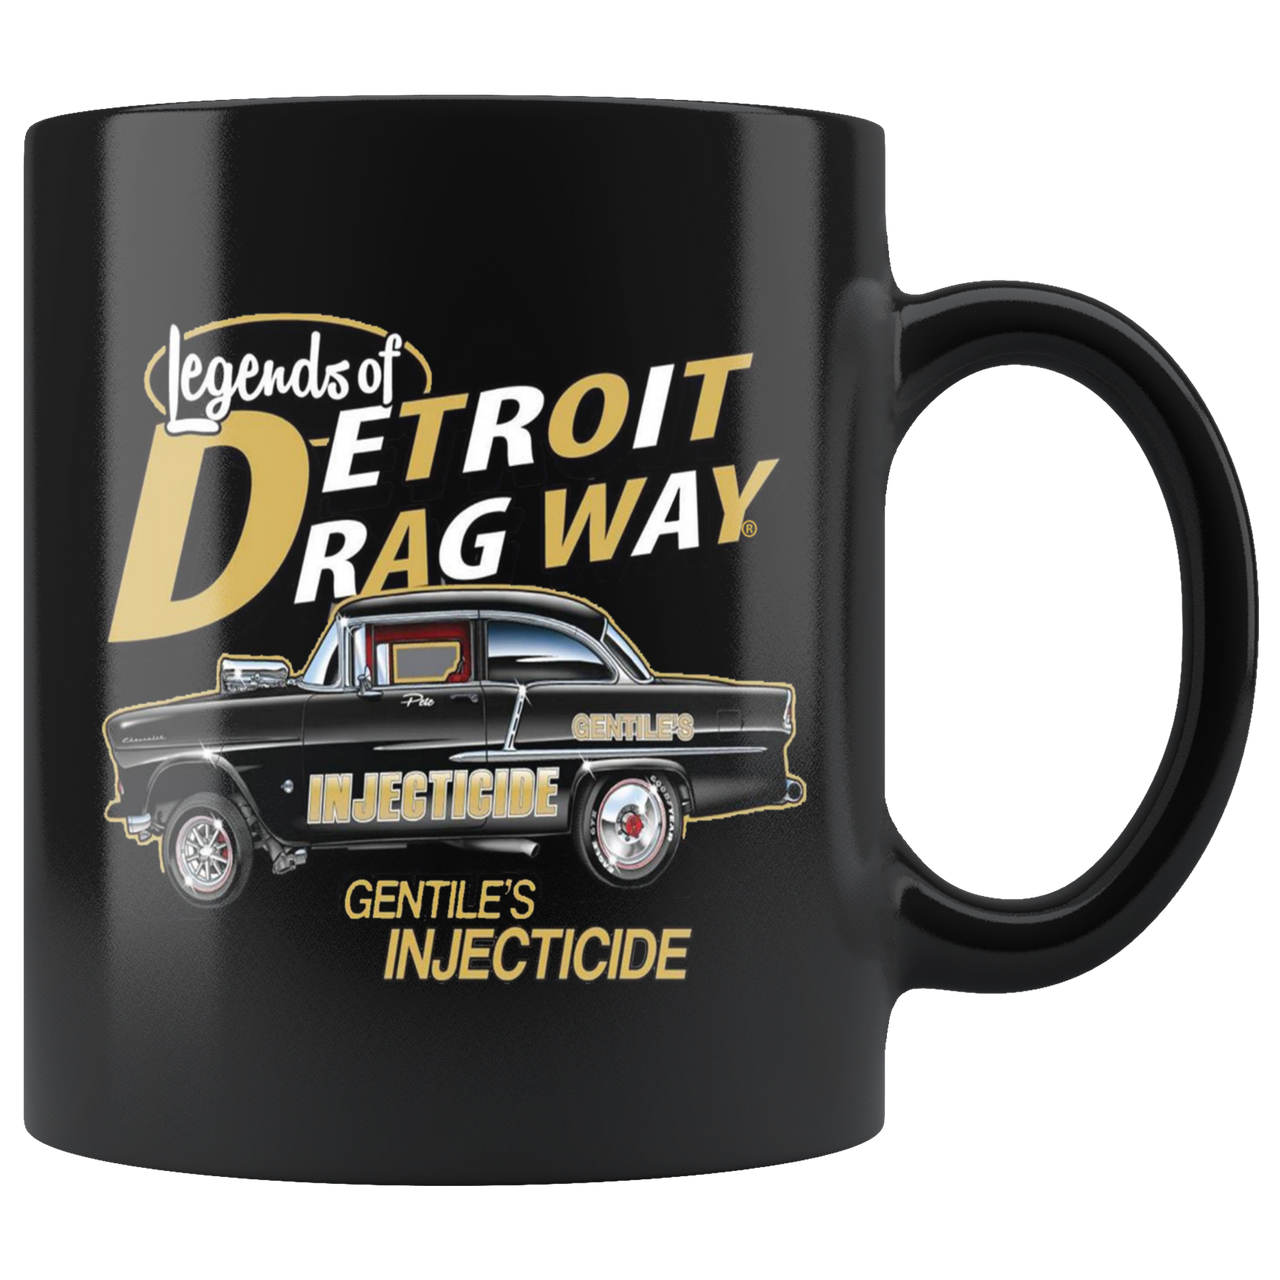 Detroit Dragway®  Injecticide Mug